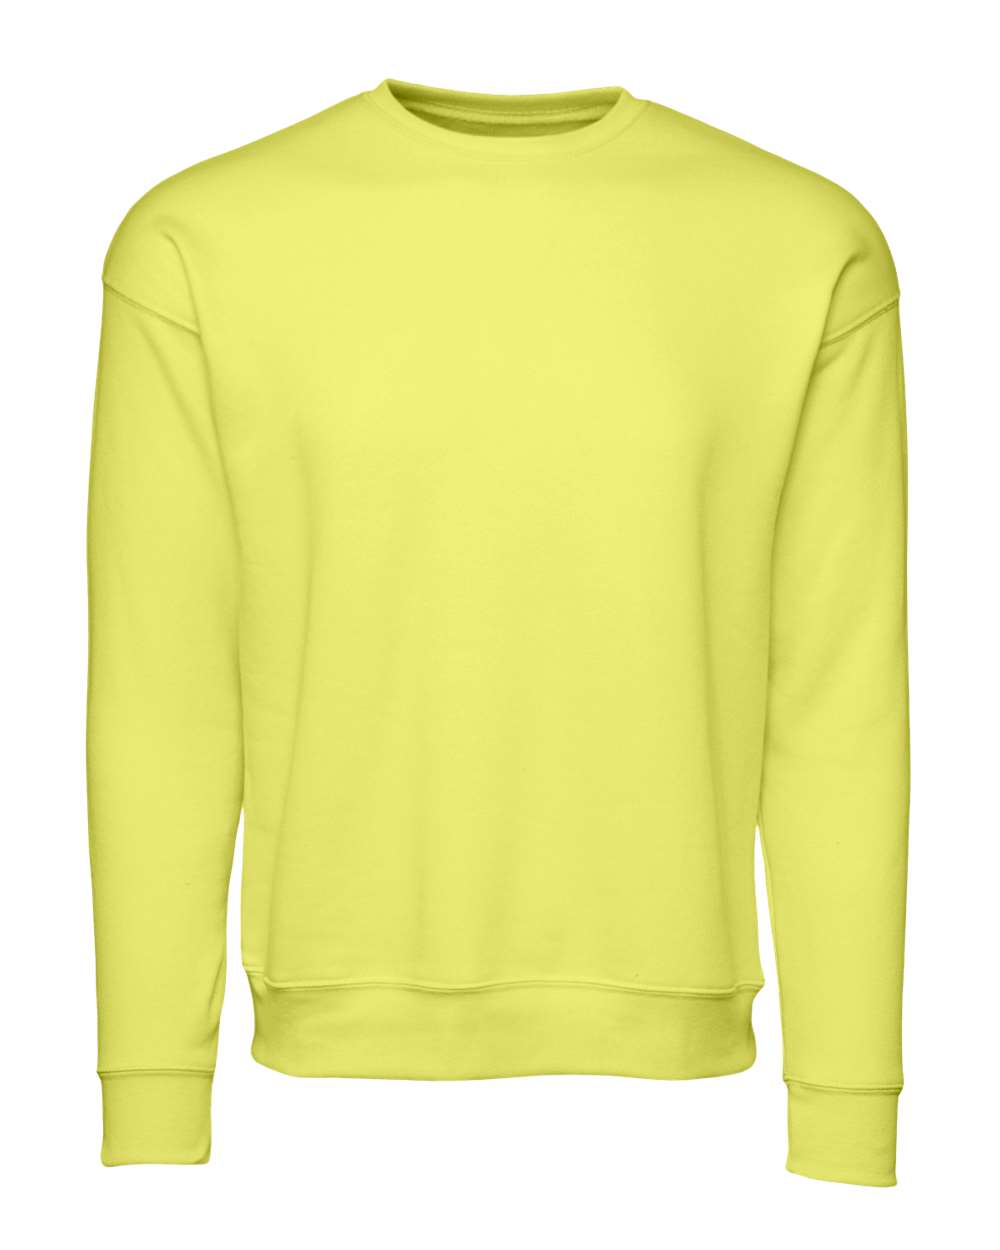 BELLA + CANVAS - Sponge Fleece Drop Shoulder Crewneck Sweatshirt - 3945